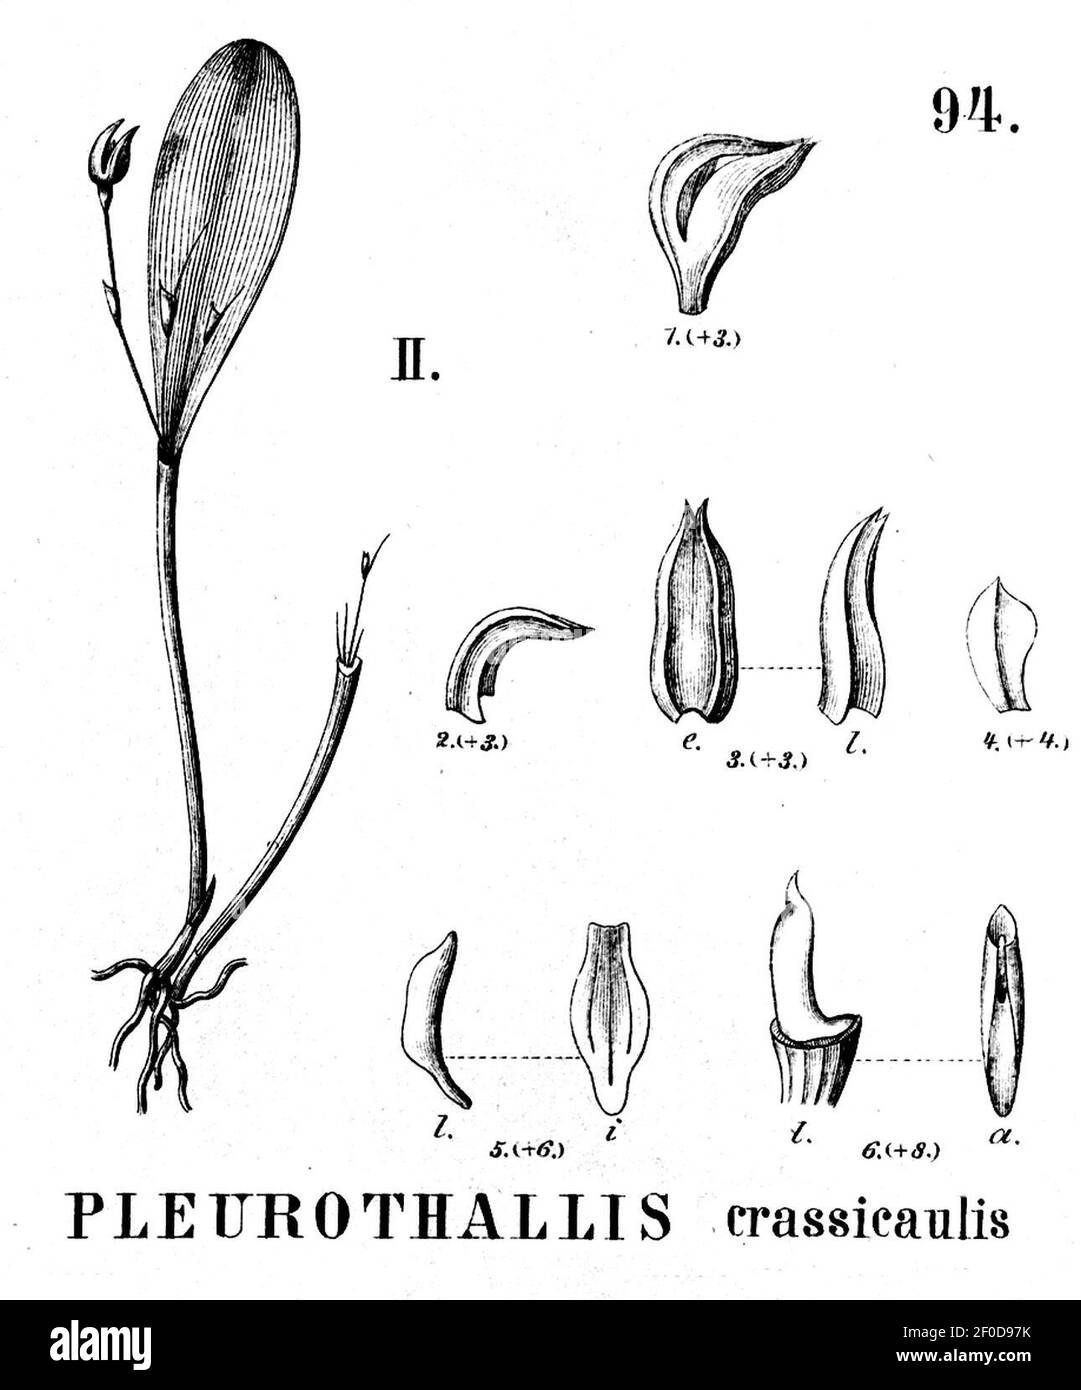 Pleurothallis crassicaulis - cutout from Flora Brasiliensis 3-4-94 fig II. Stock Photo